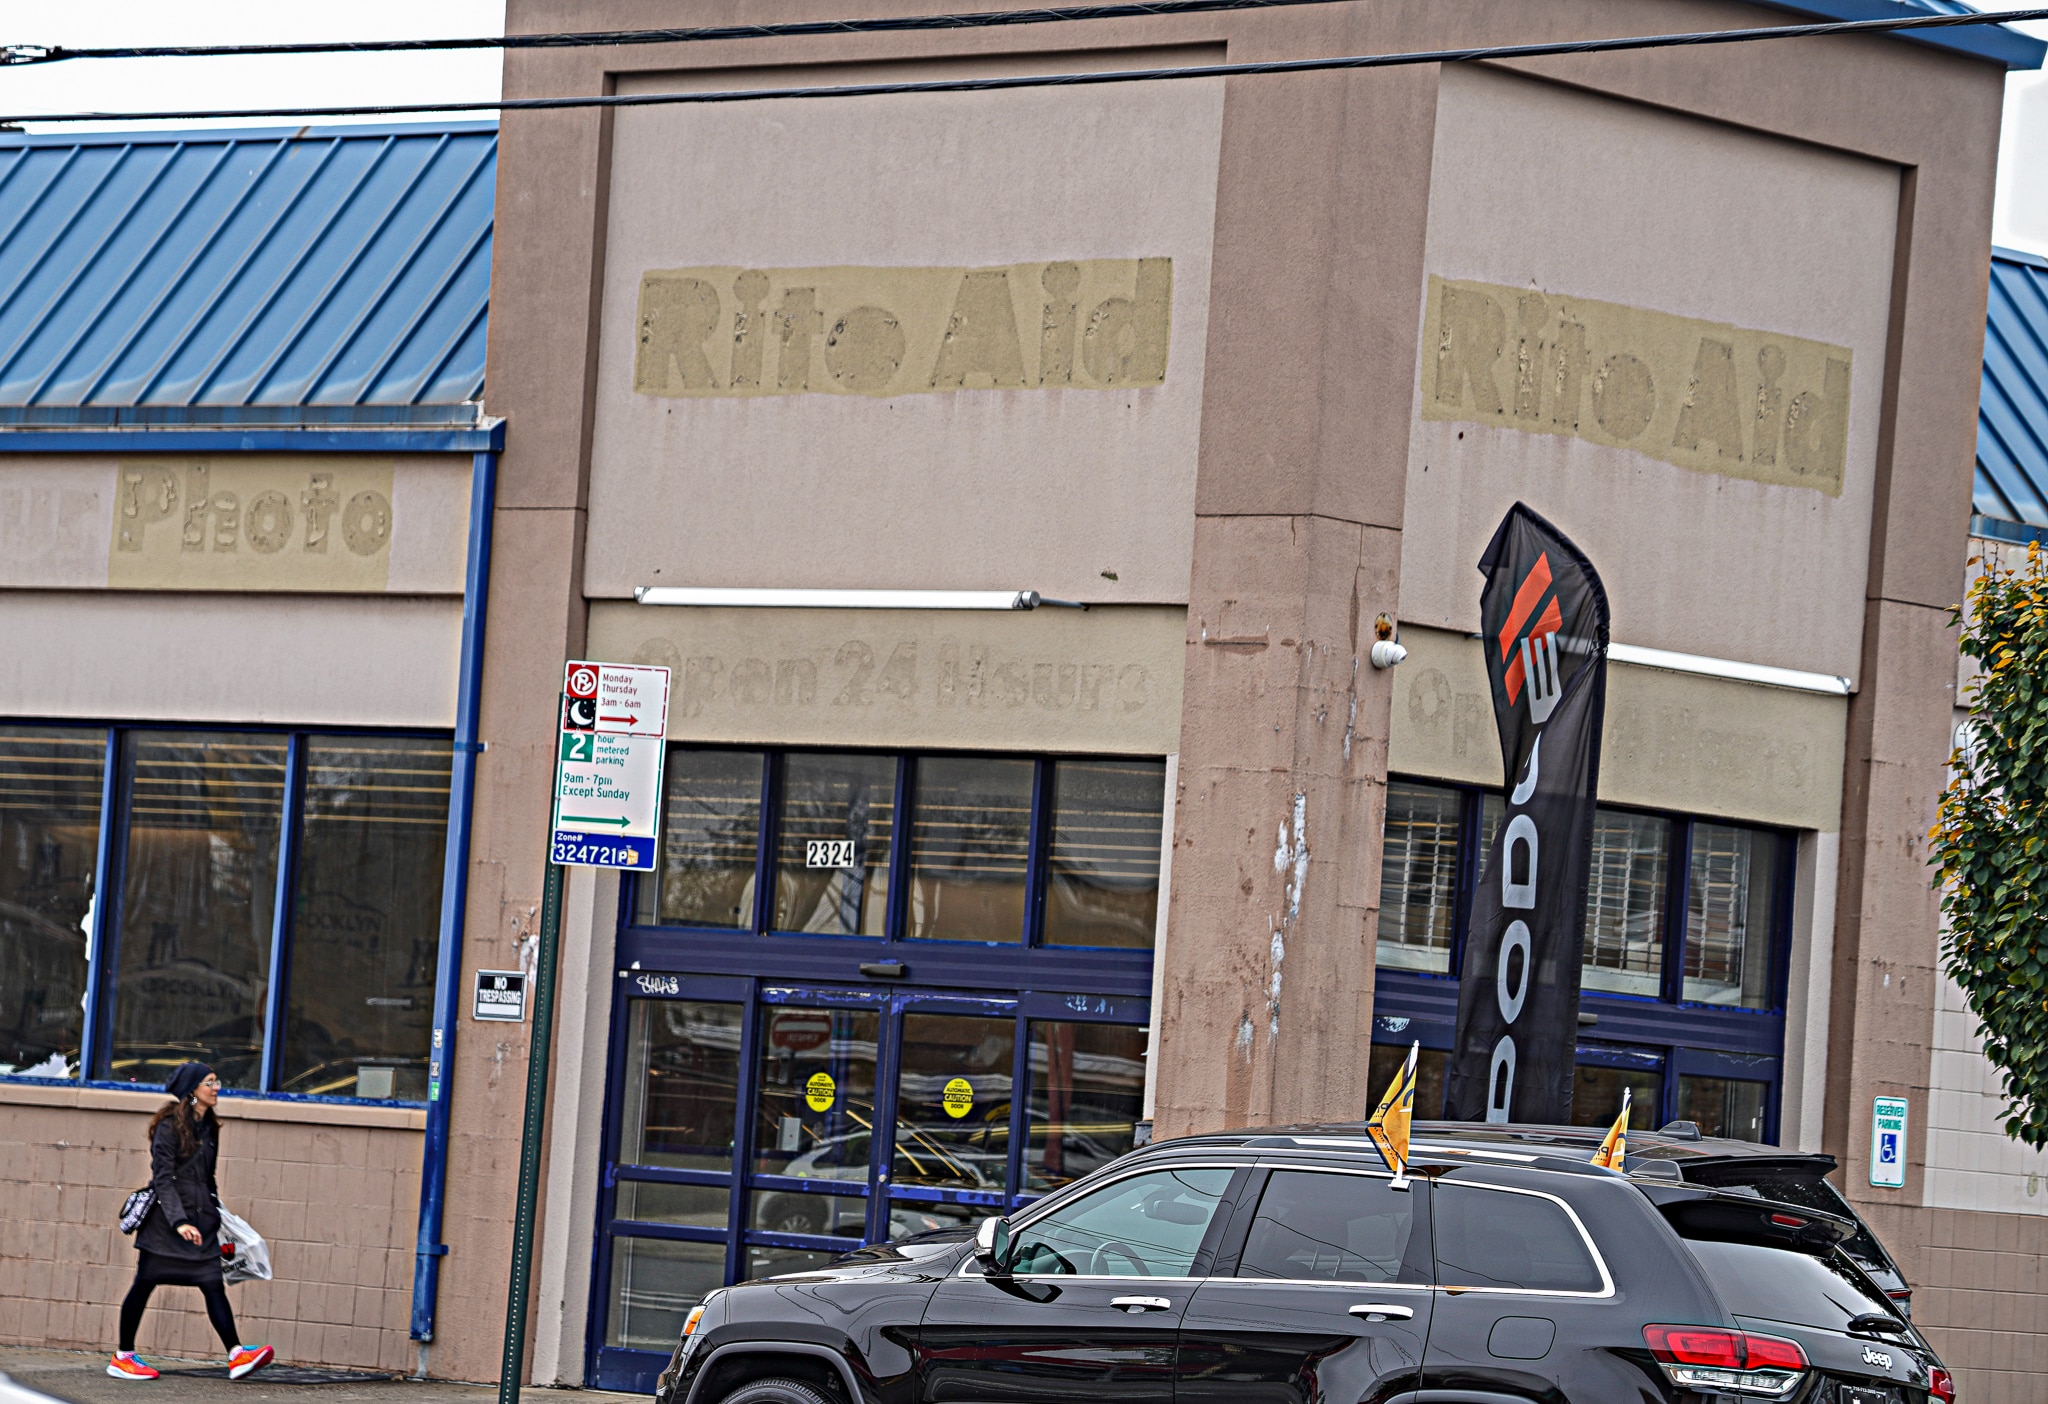 Arts & craft chain Michaels closing North Babylon store - Newsday